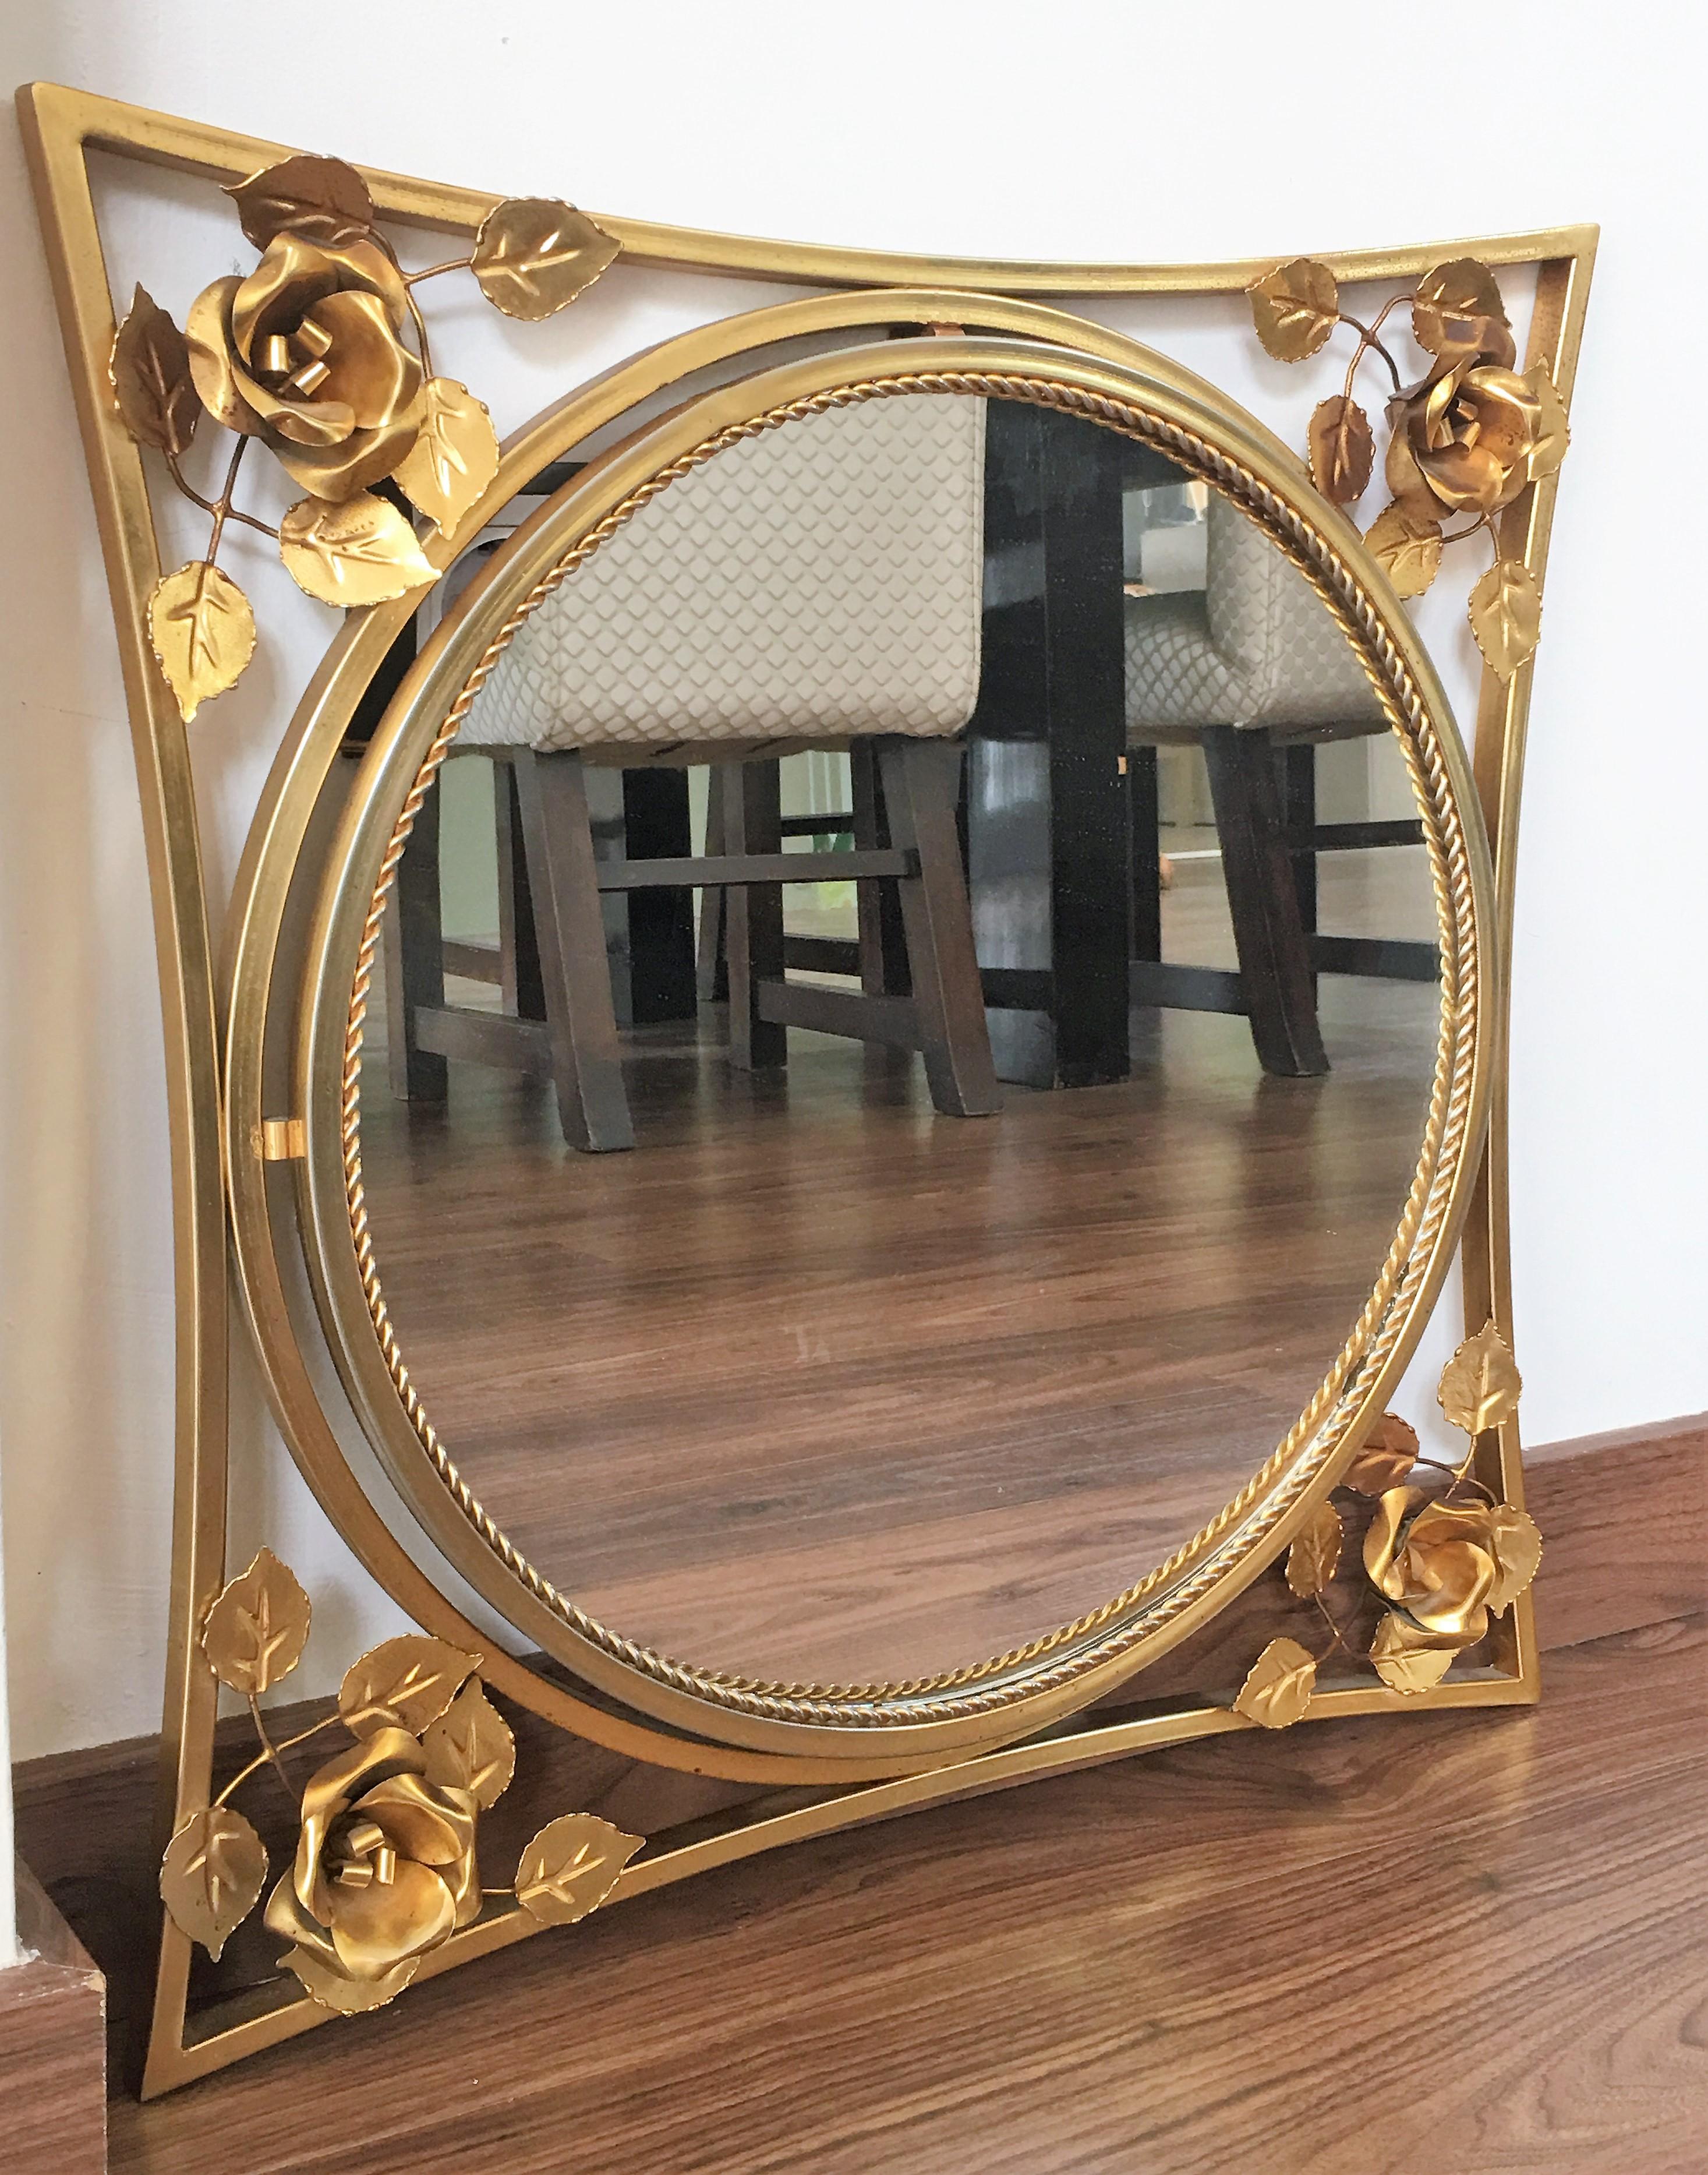 20th century Art Decó gold gilt metal mirror with beautiful corners fleurs.